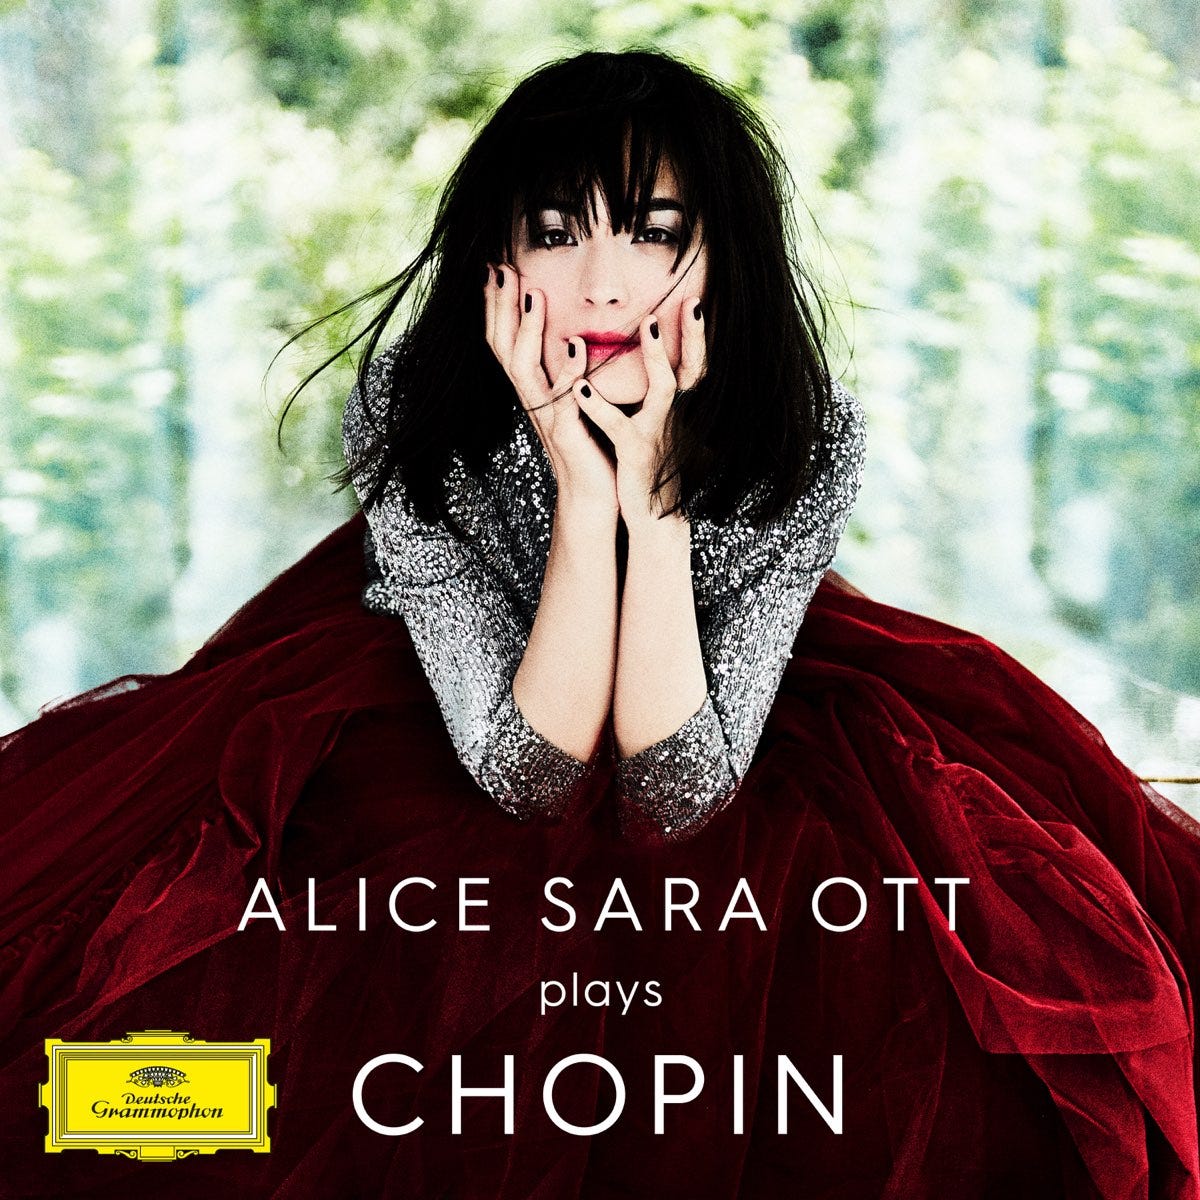 Alice Sara Ott plays Chopin by Alice Sara Ott on Apple Music